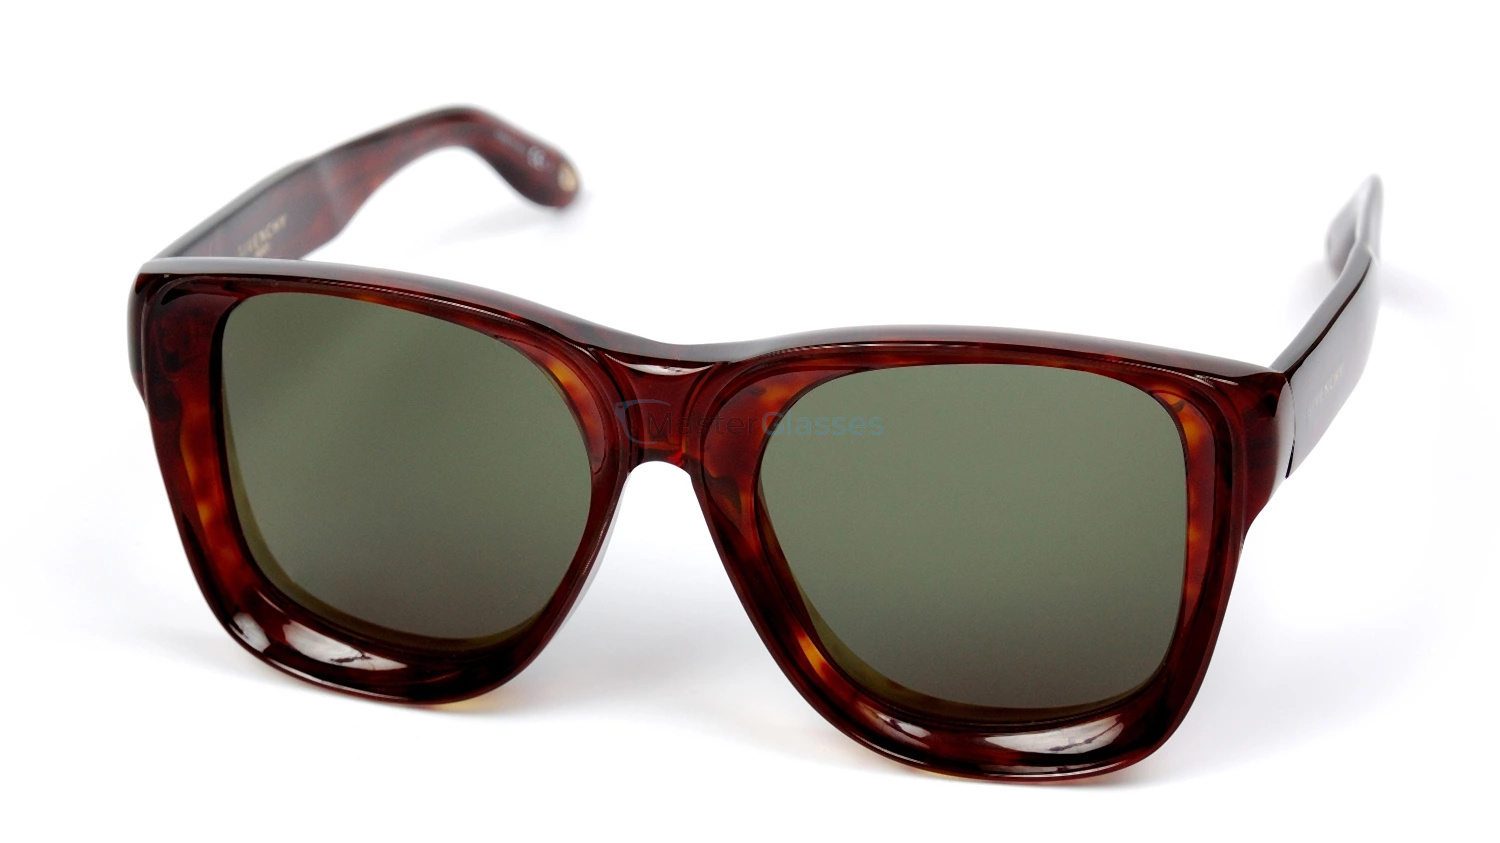 Gv7156s-86-qt очки. Очки унисекс дживанши. Givenchy Sunglasses GV 7212/S. Очки Givenchy 7201-s 086.